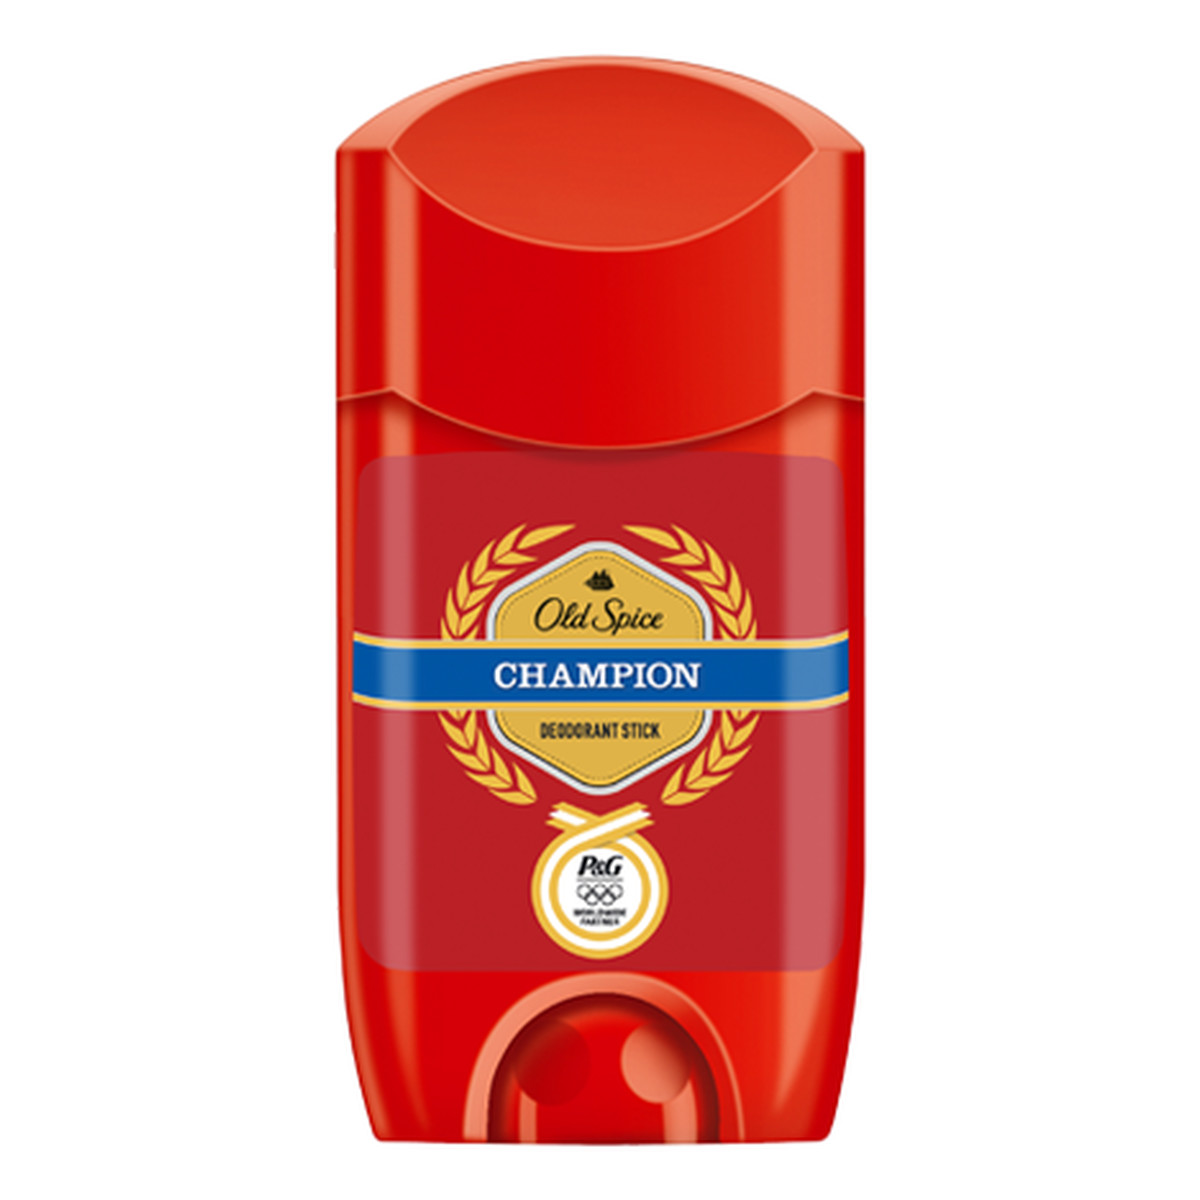 Old Spice Champion Dezodorant Sztyft 50ml